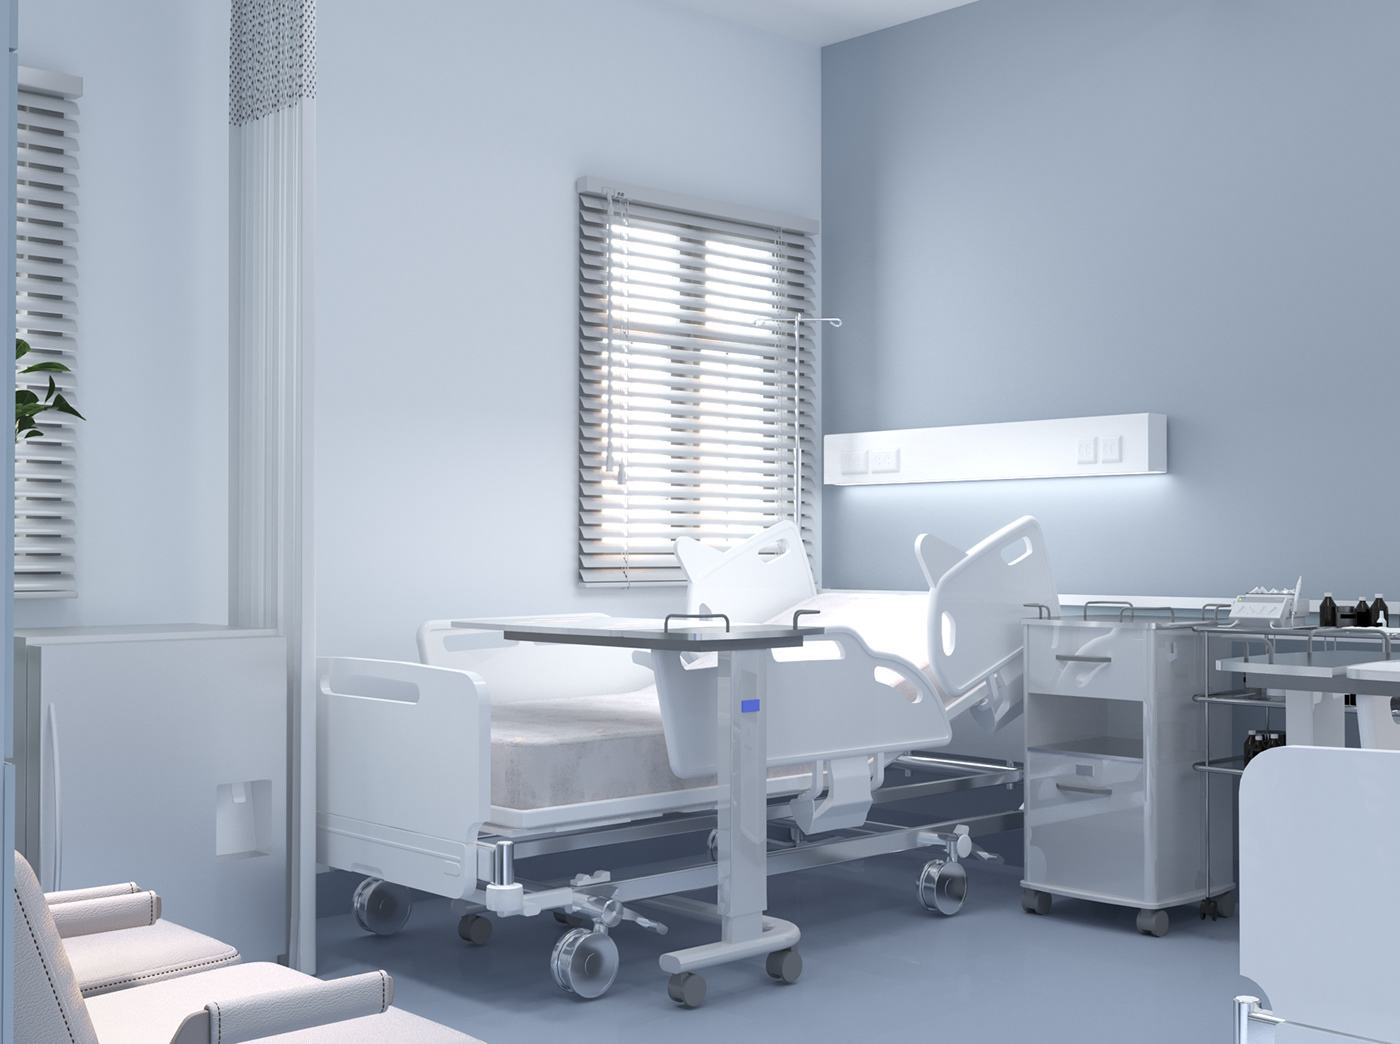 3d modeling 3ds max architecture corona hospital inteior design medicine Render visualization